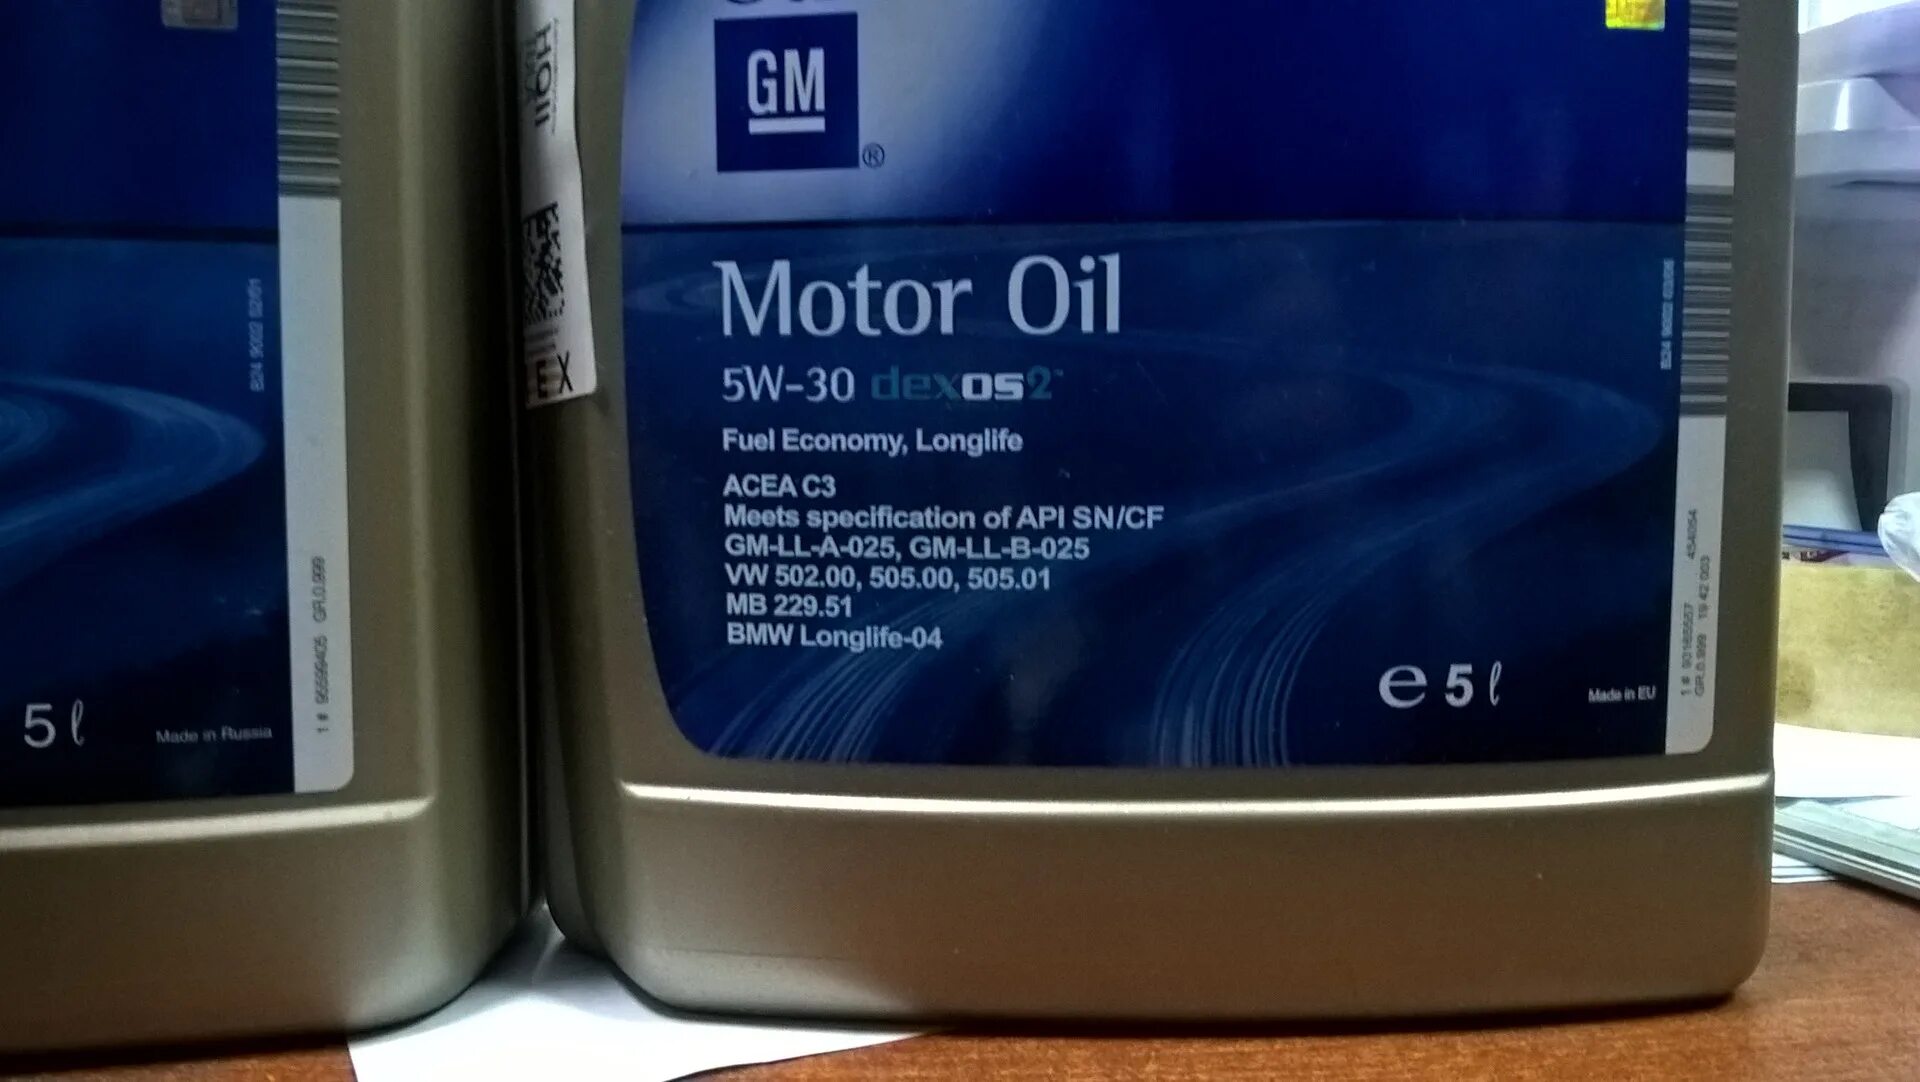 Масло GM 4hp16. 9813971 GM масло. GM корейское масло. Масло GM Россия.